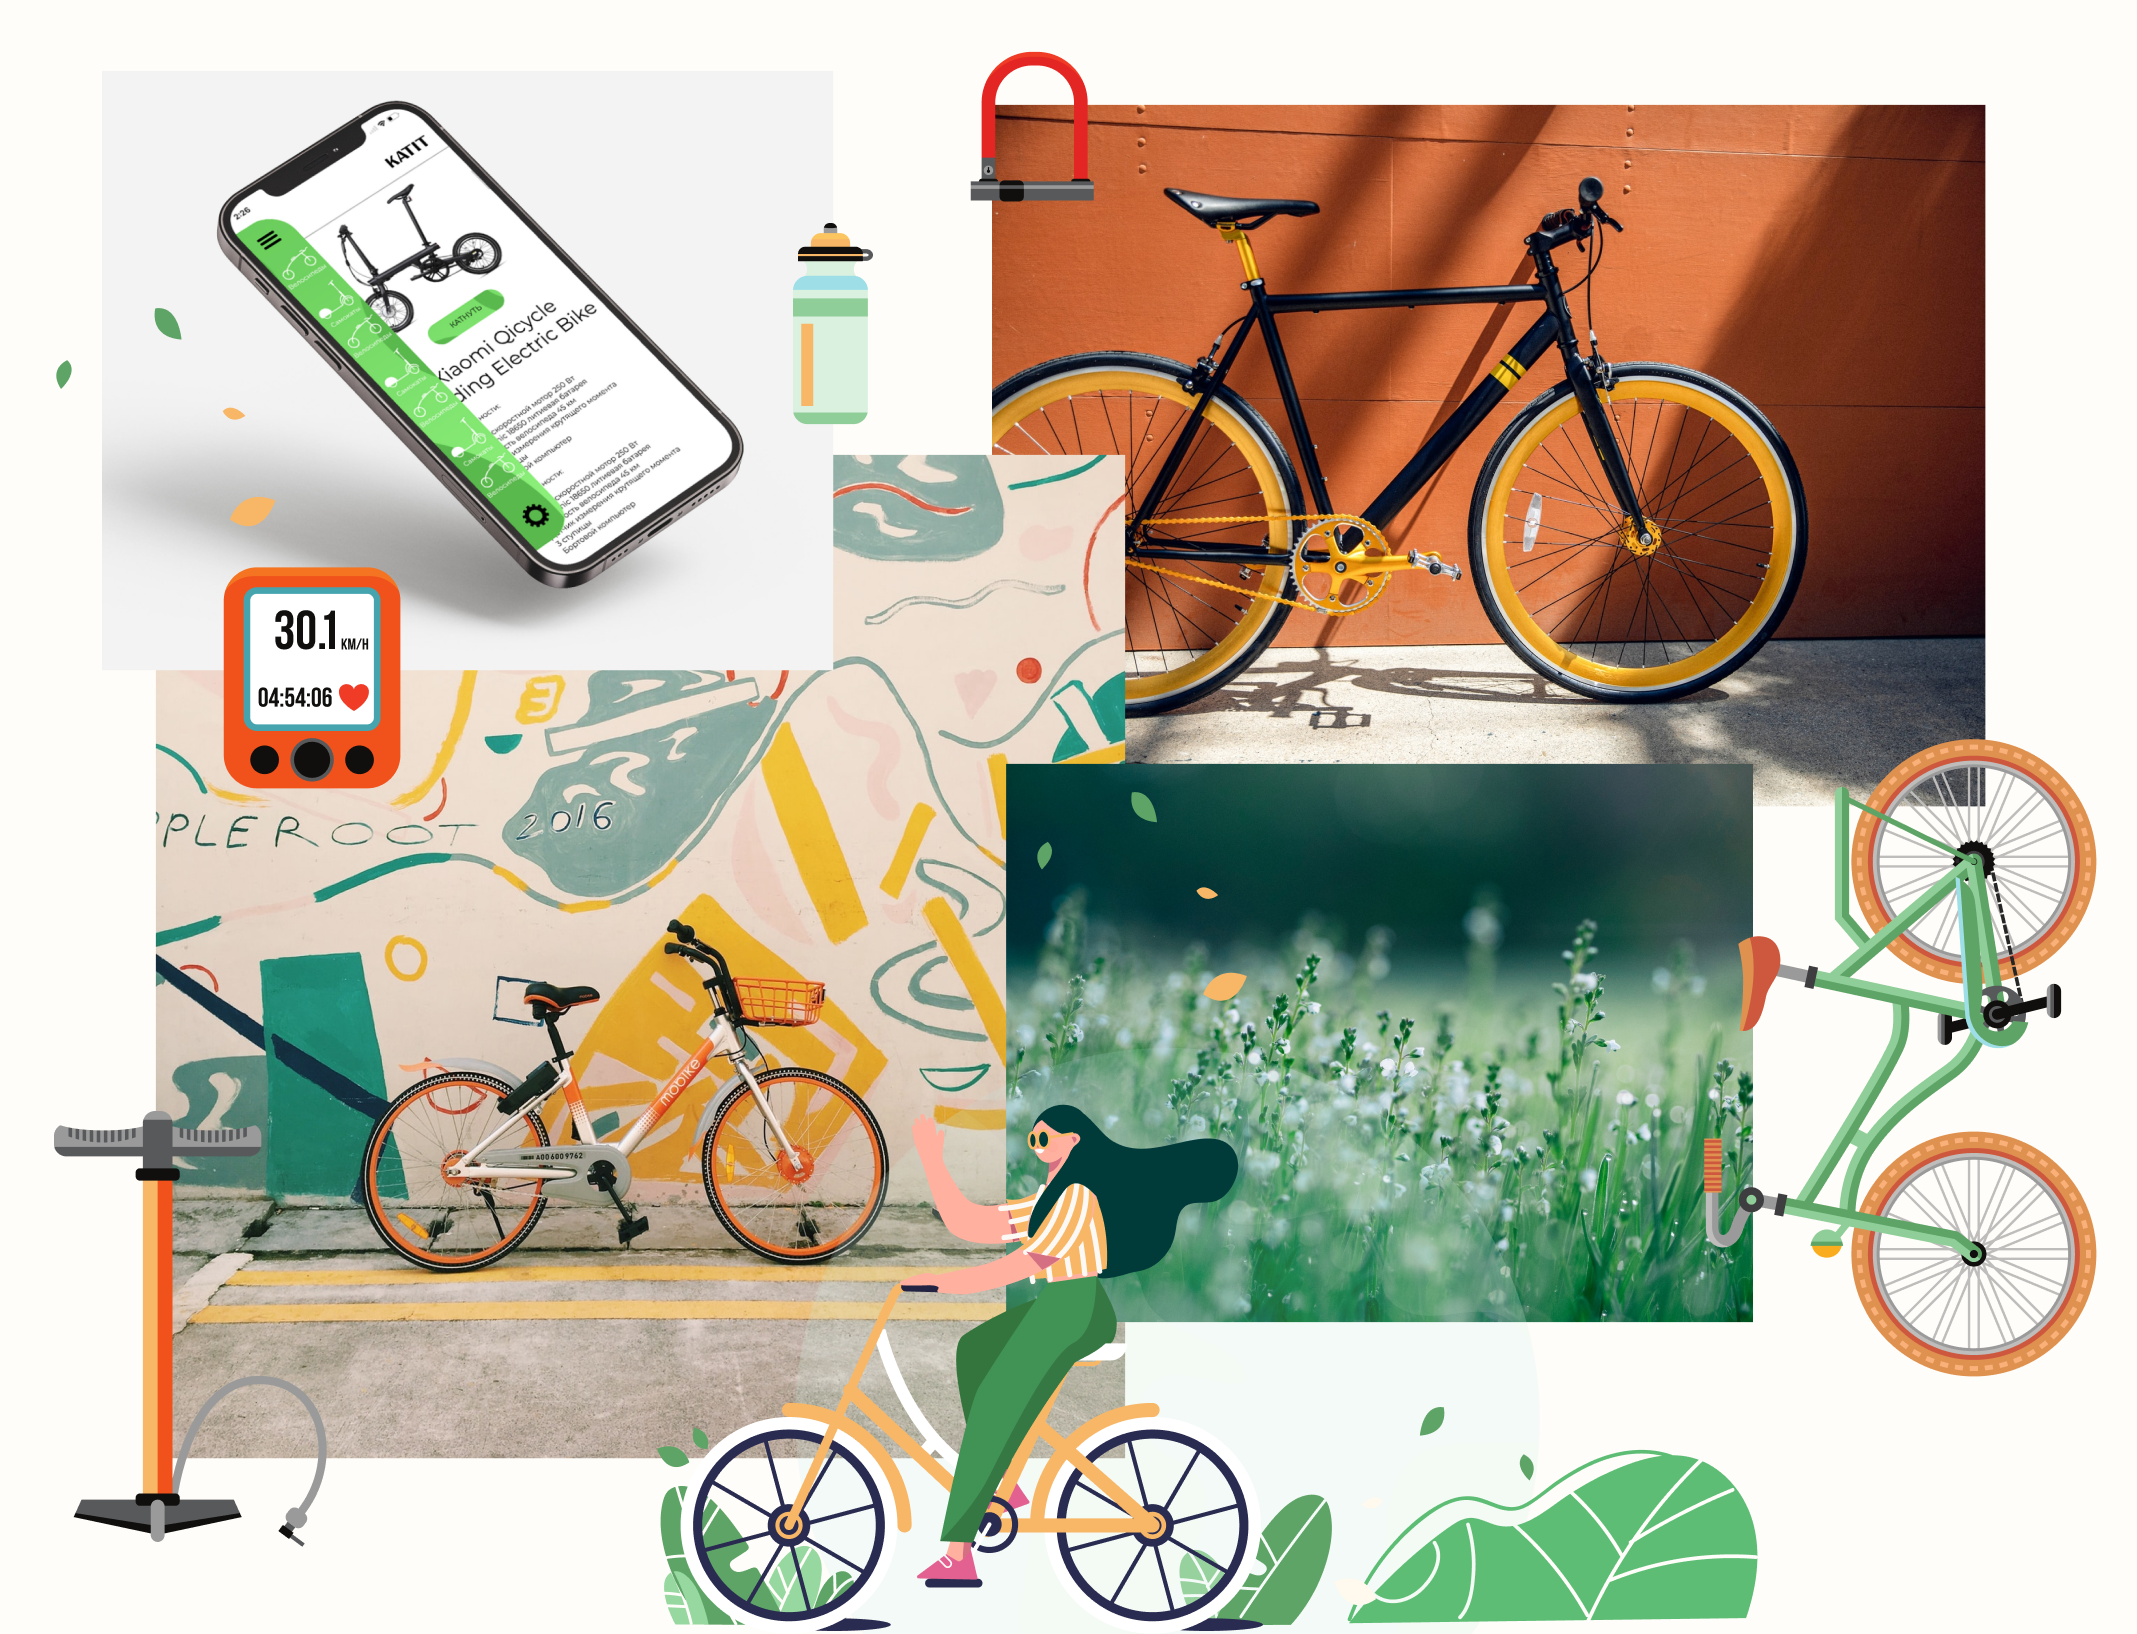 uiux-case-study-the-bikelike-mobile-app image